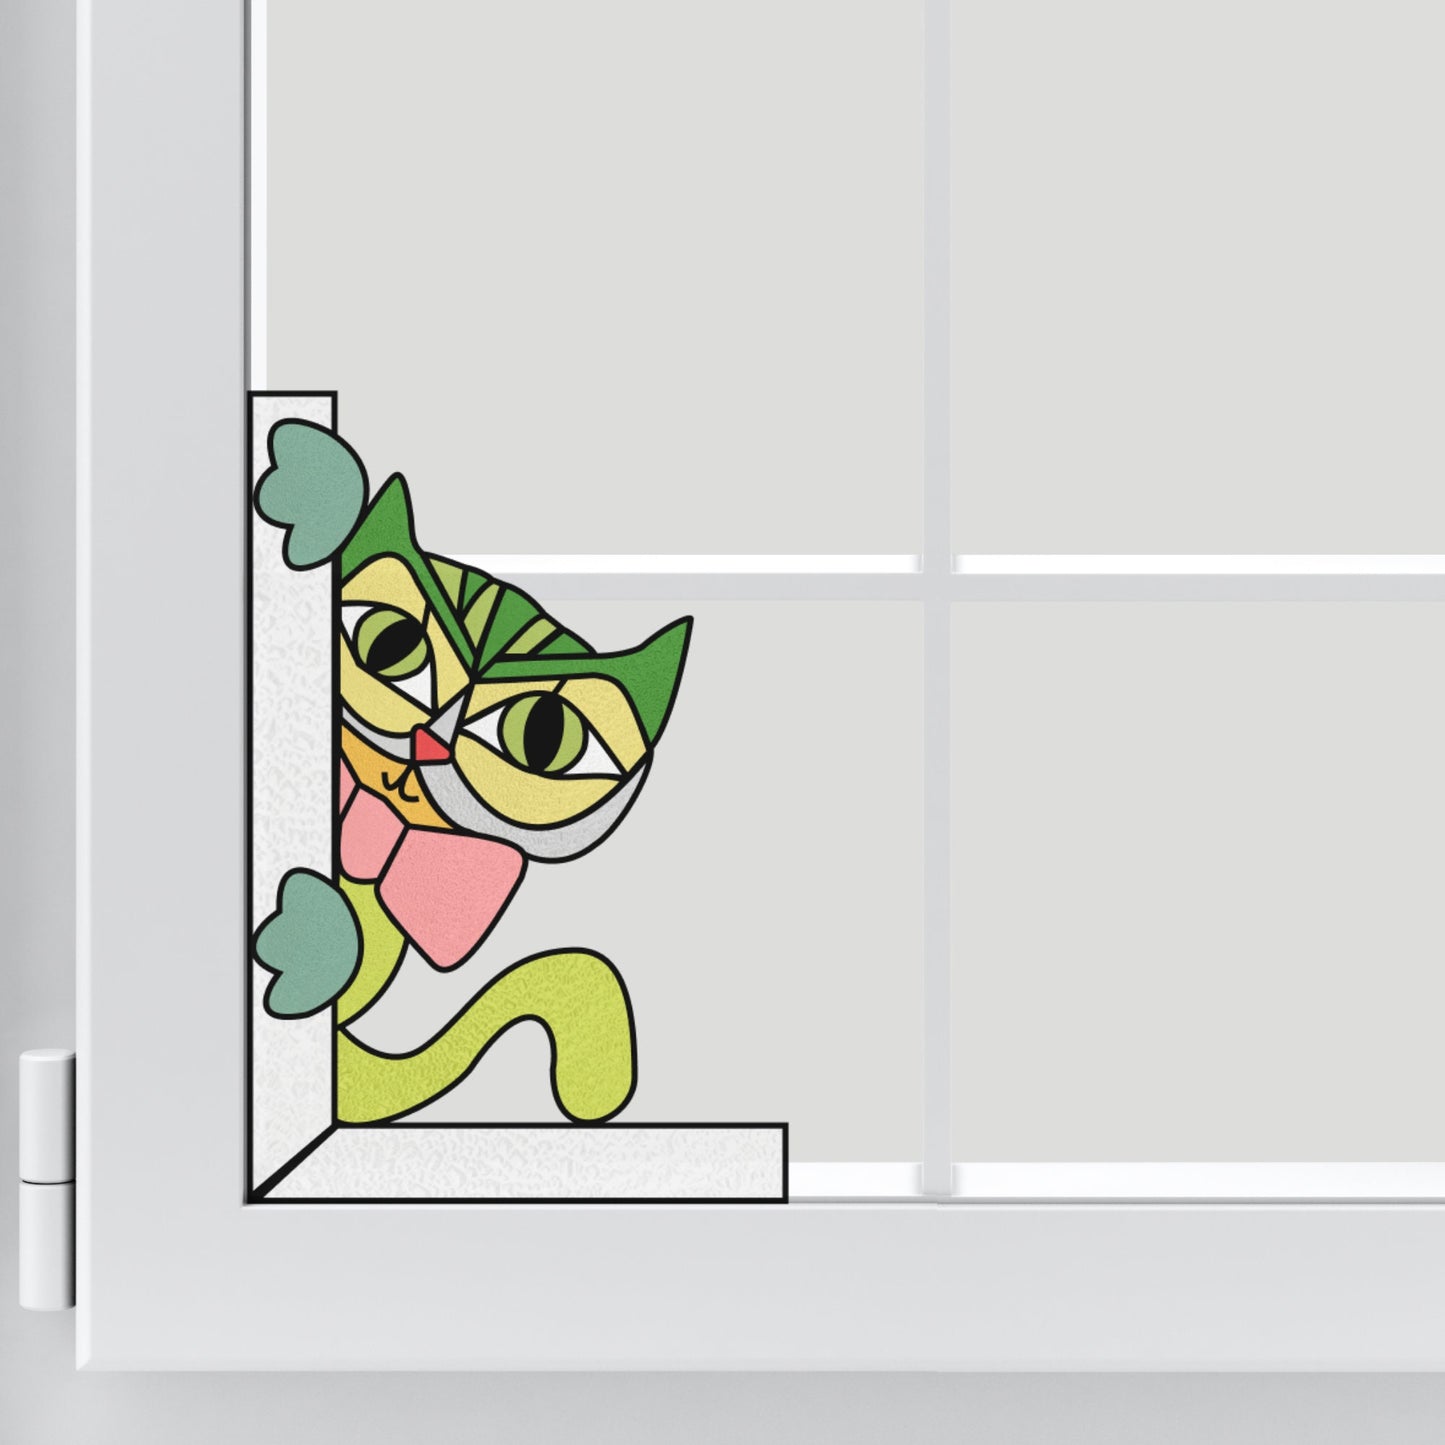 Buntglas-Katzen-Sonnenfänger-Muster • Katzenfenster-Eckmuster